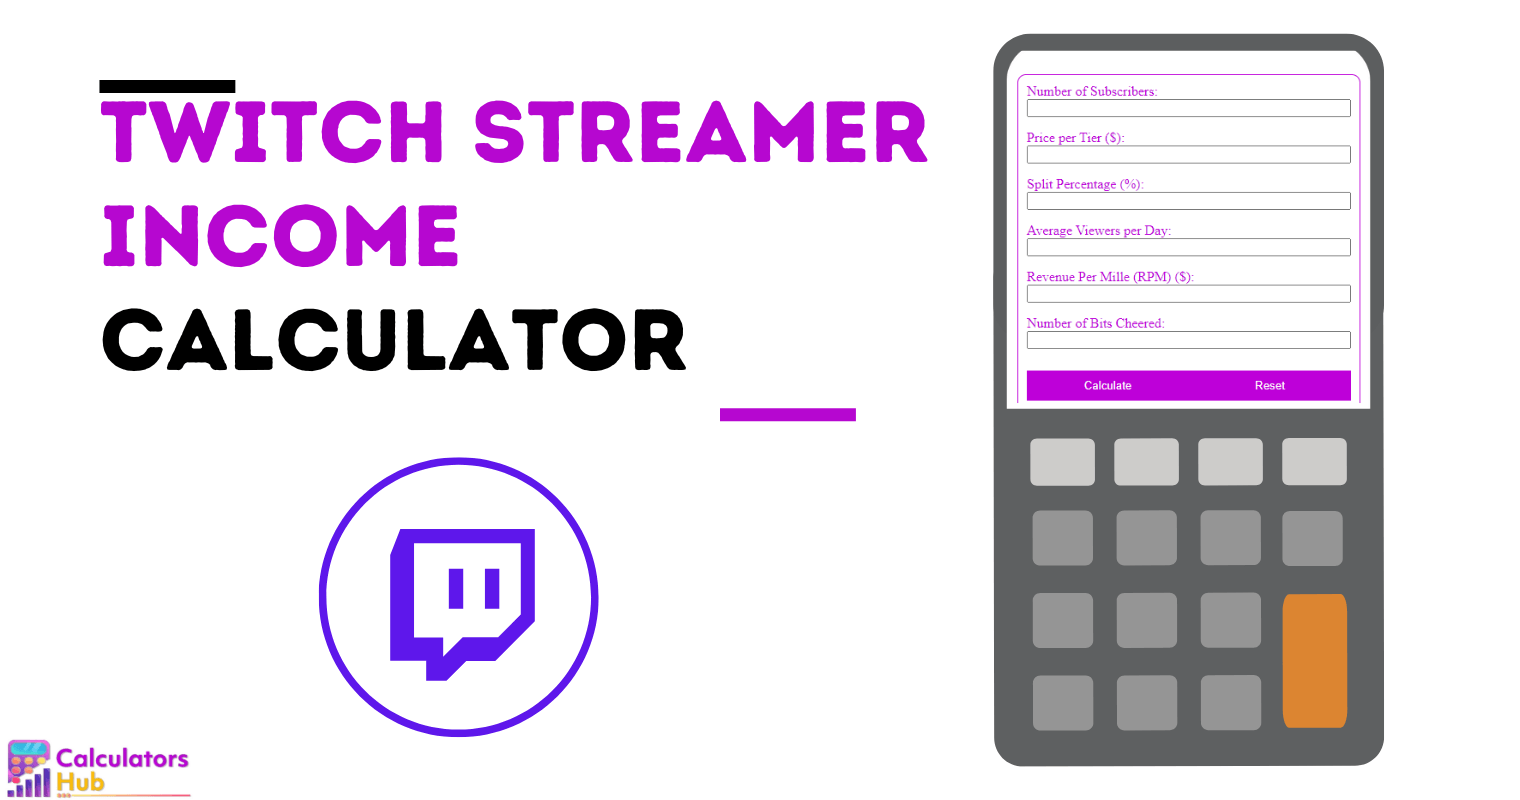 Twitch Streamer Income Calculator